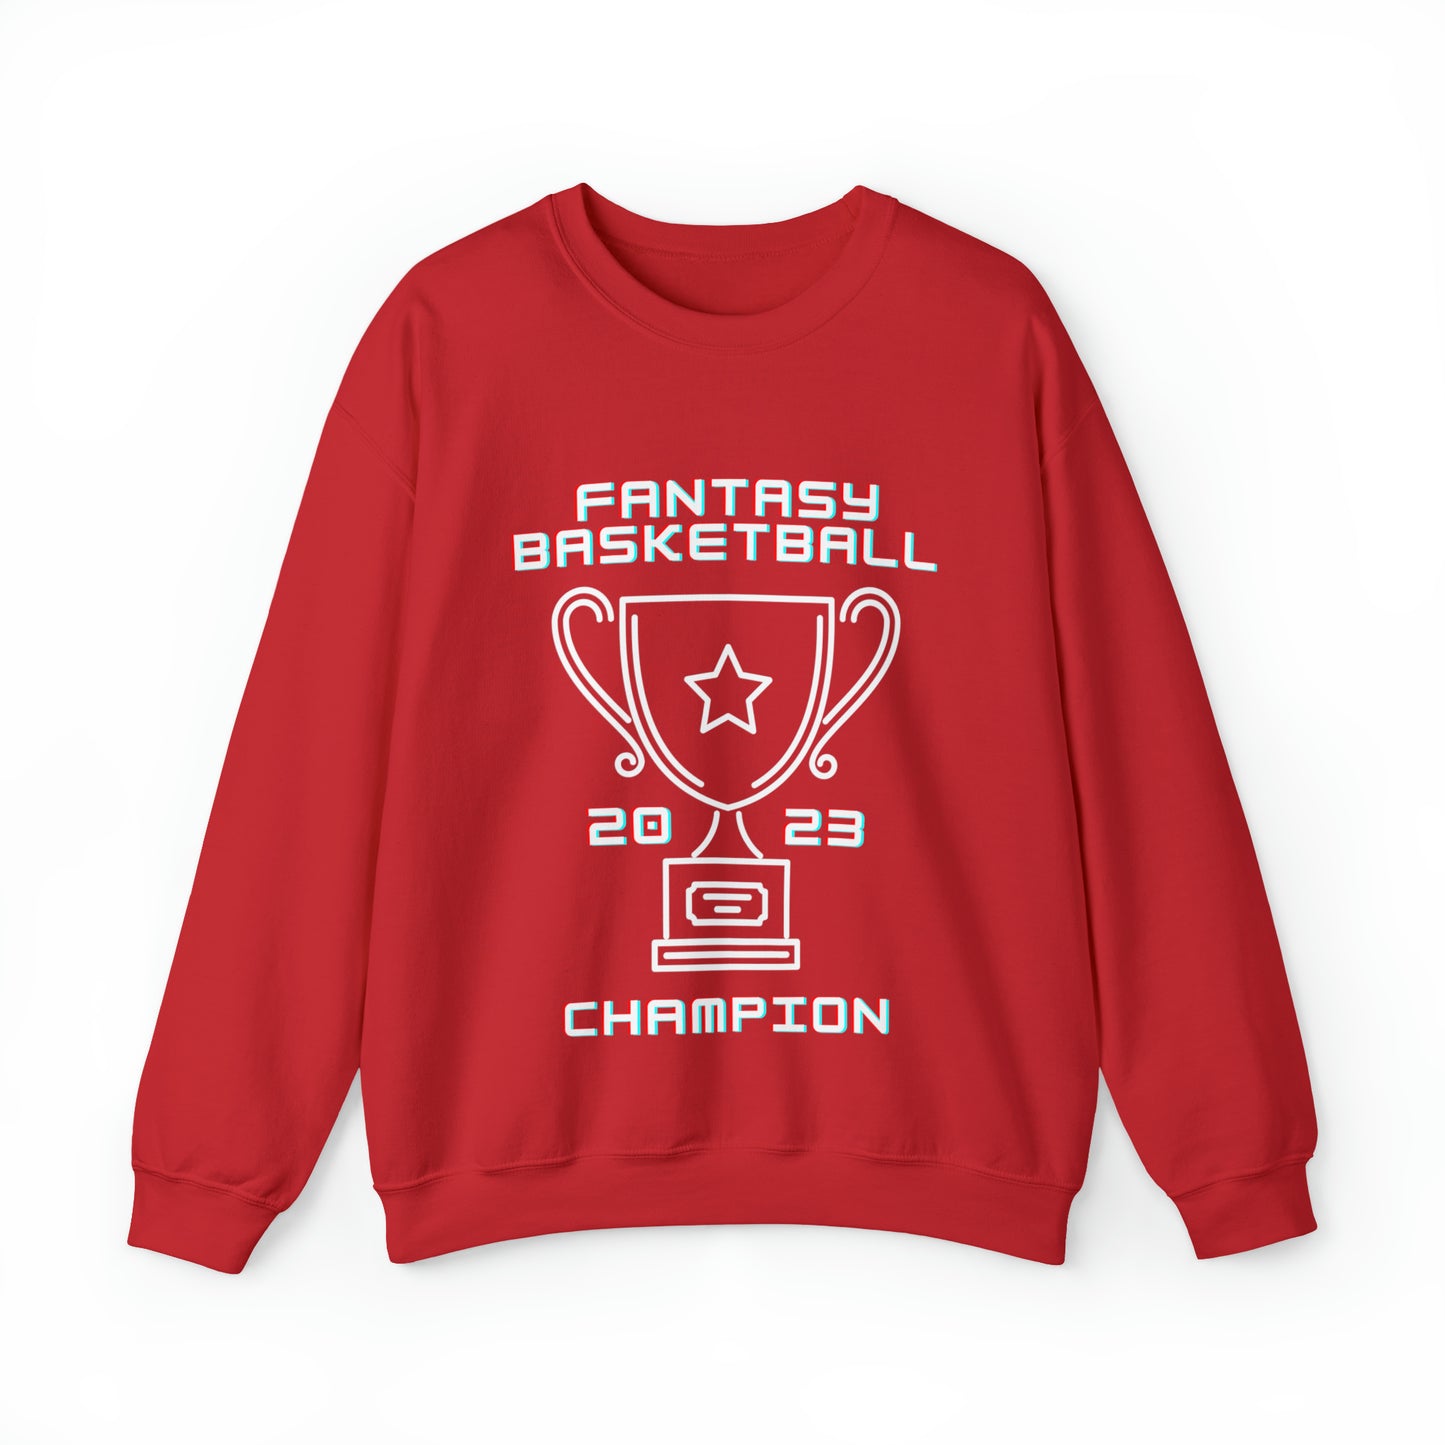 2023 Fantasy Basketball Champion Fantasy Champ Unisex Sweatshirt